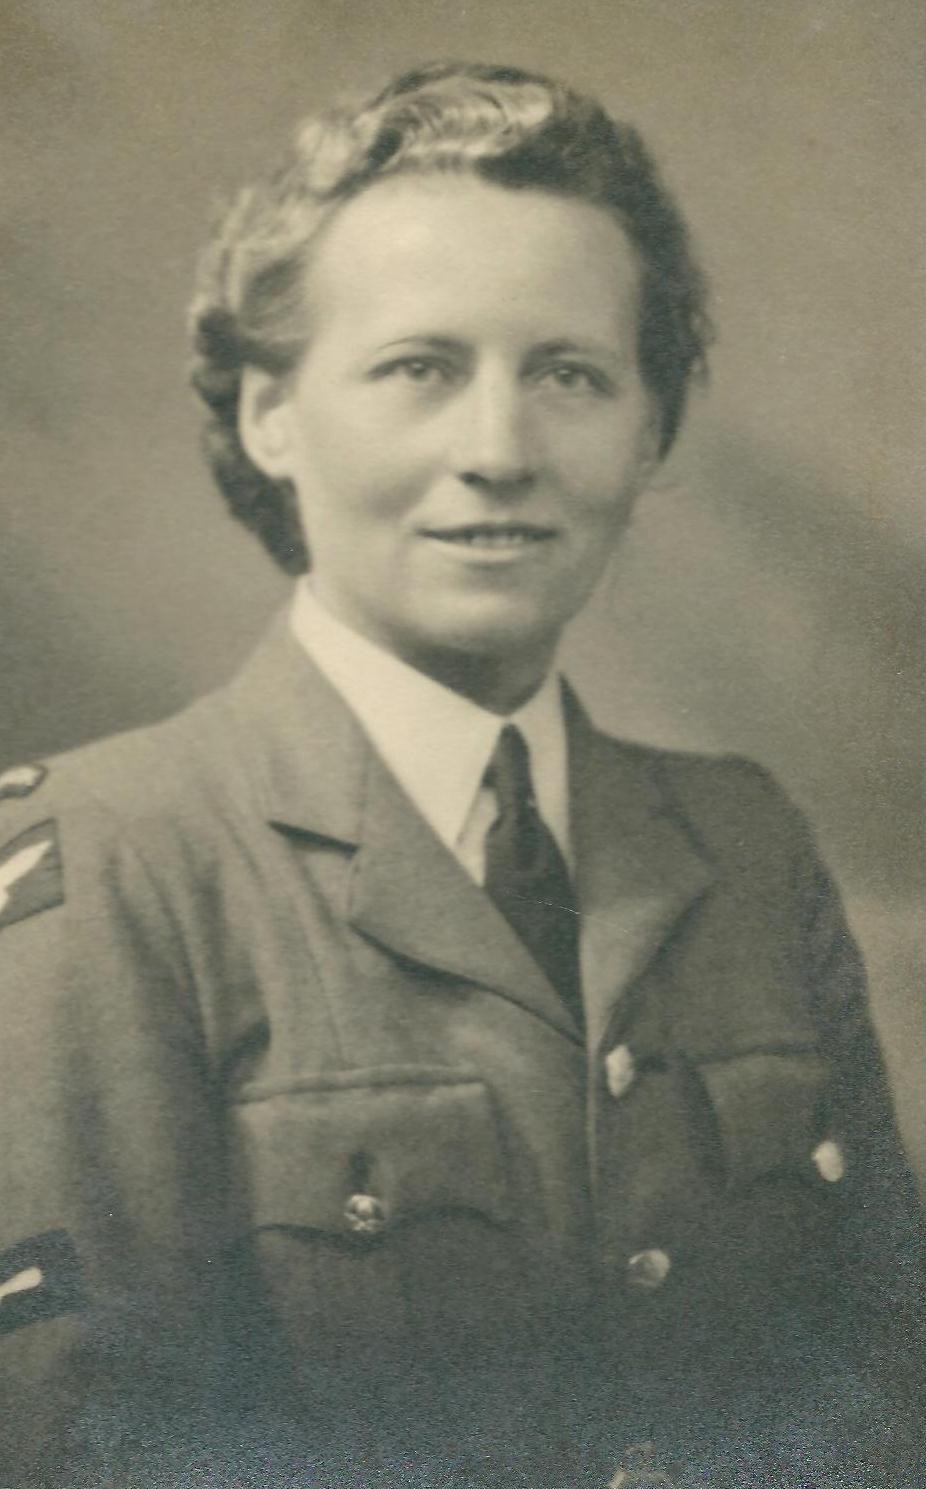 LACW Karen Hansen in her uniform while serving as a WAAF (Museum of Danish Resistance).